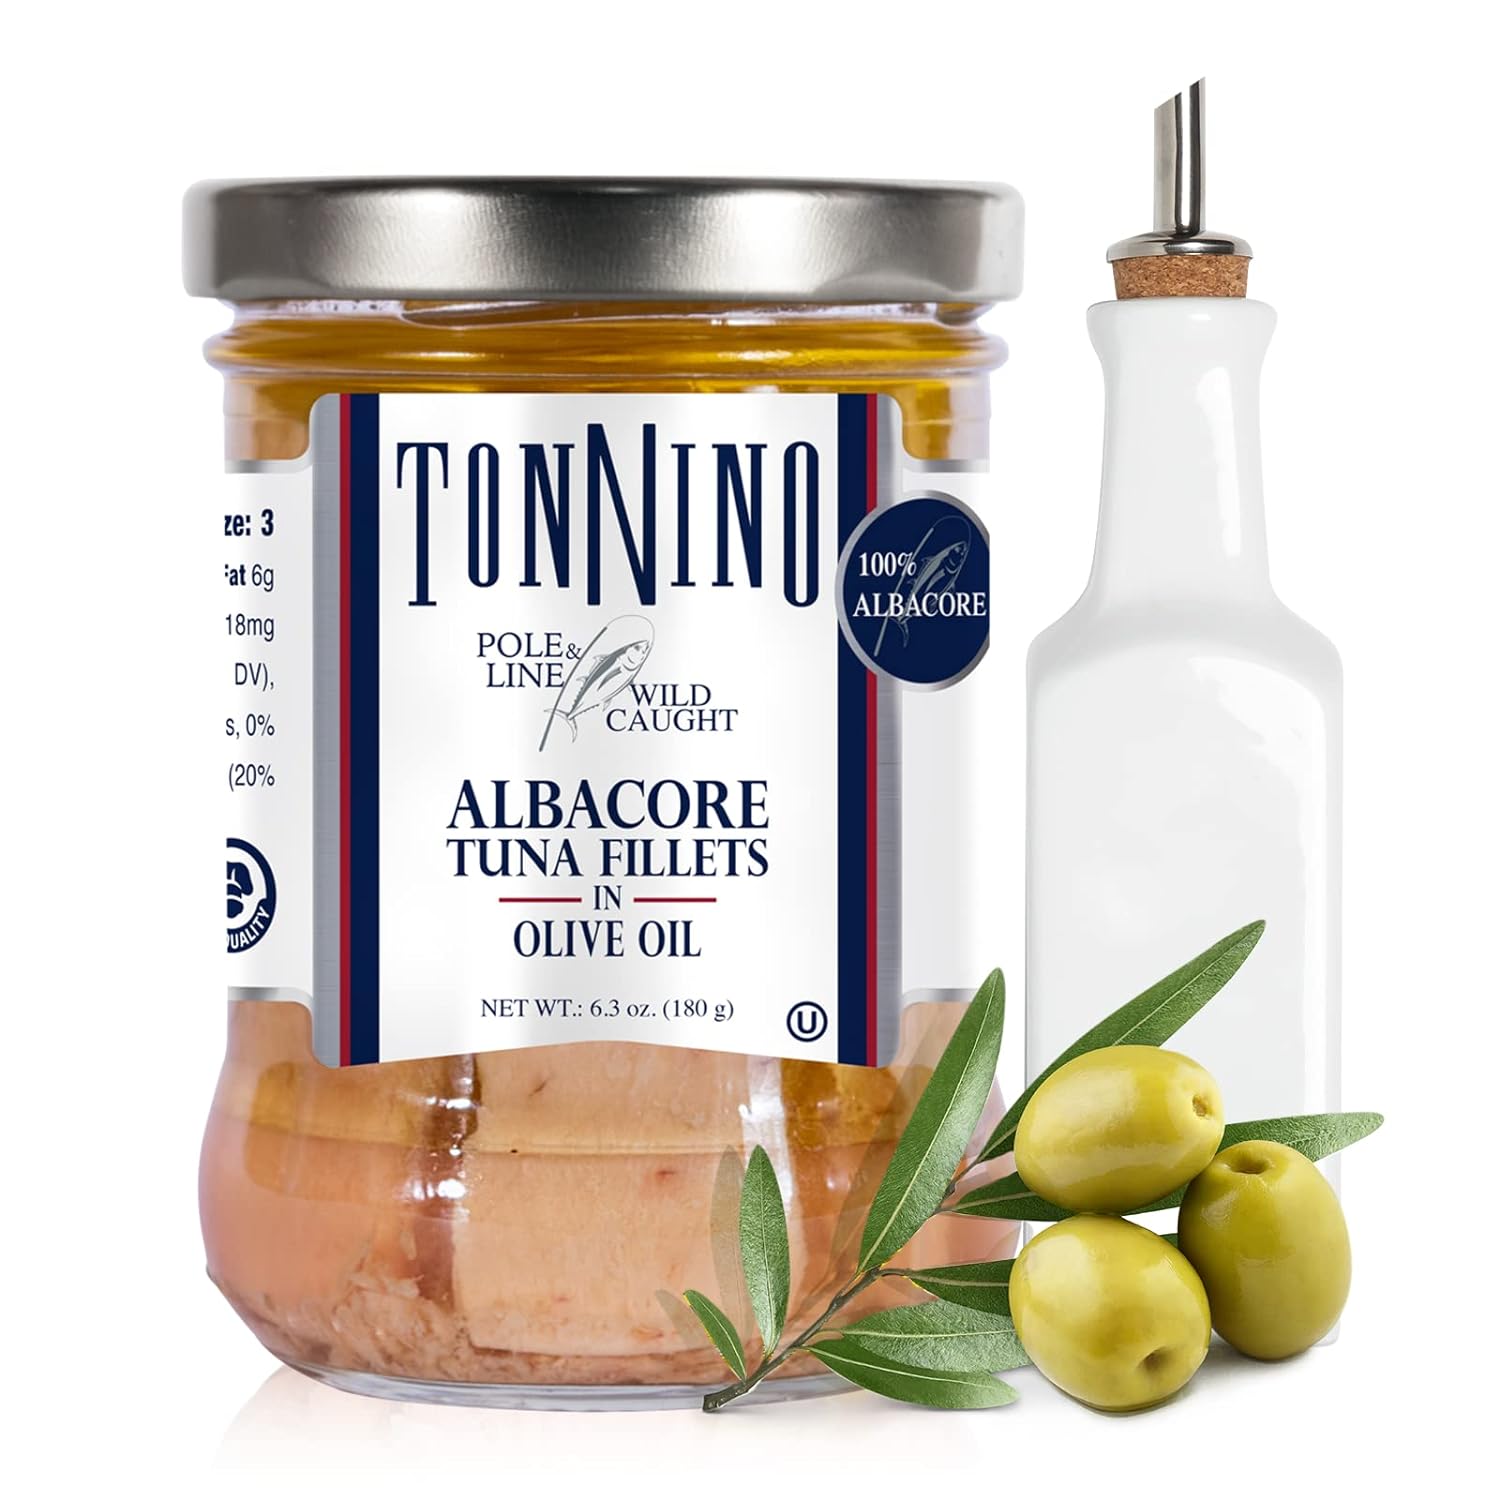 Tonnino Albacore Tuna in Olive Oil 6.3oz Premium 6-Pack: Omega-3 Rich, High Protein, Gluten-Free, Ready-to-Eat Tuna Packets for Tuna Salad, Tuna Fish Alternative to Salmon, Kosher, Pole & Line Caught